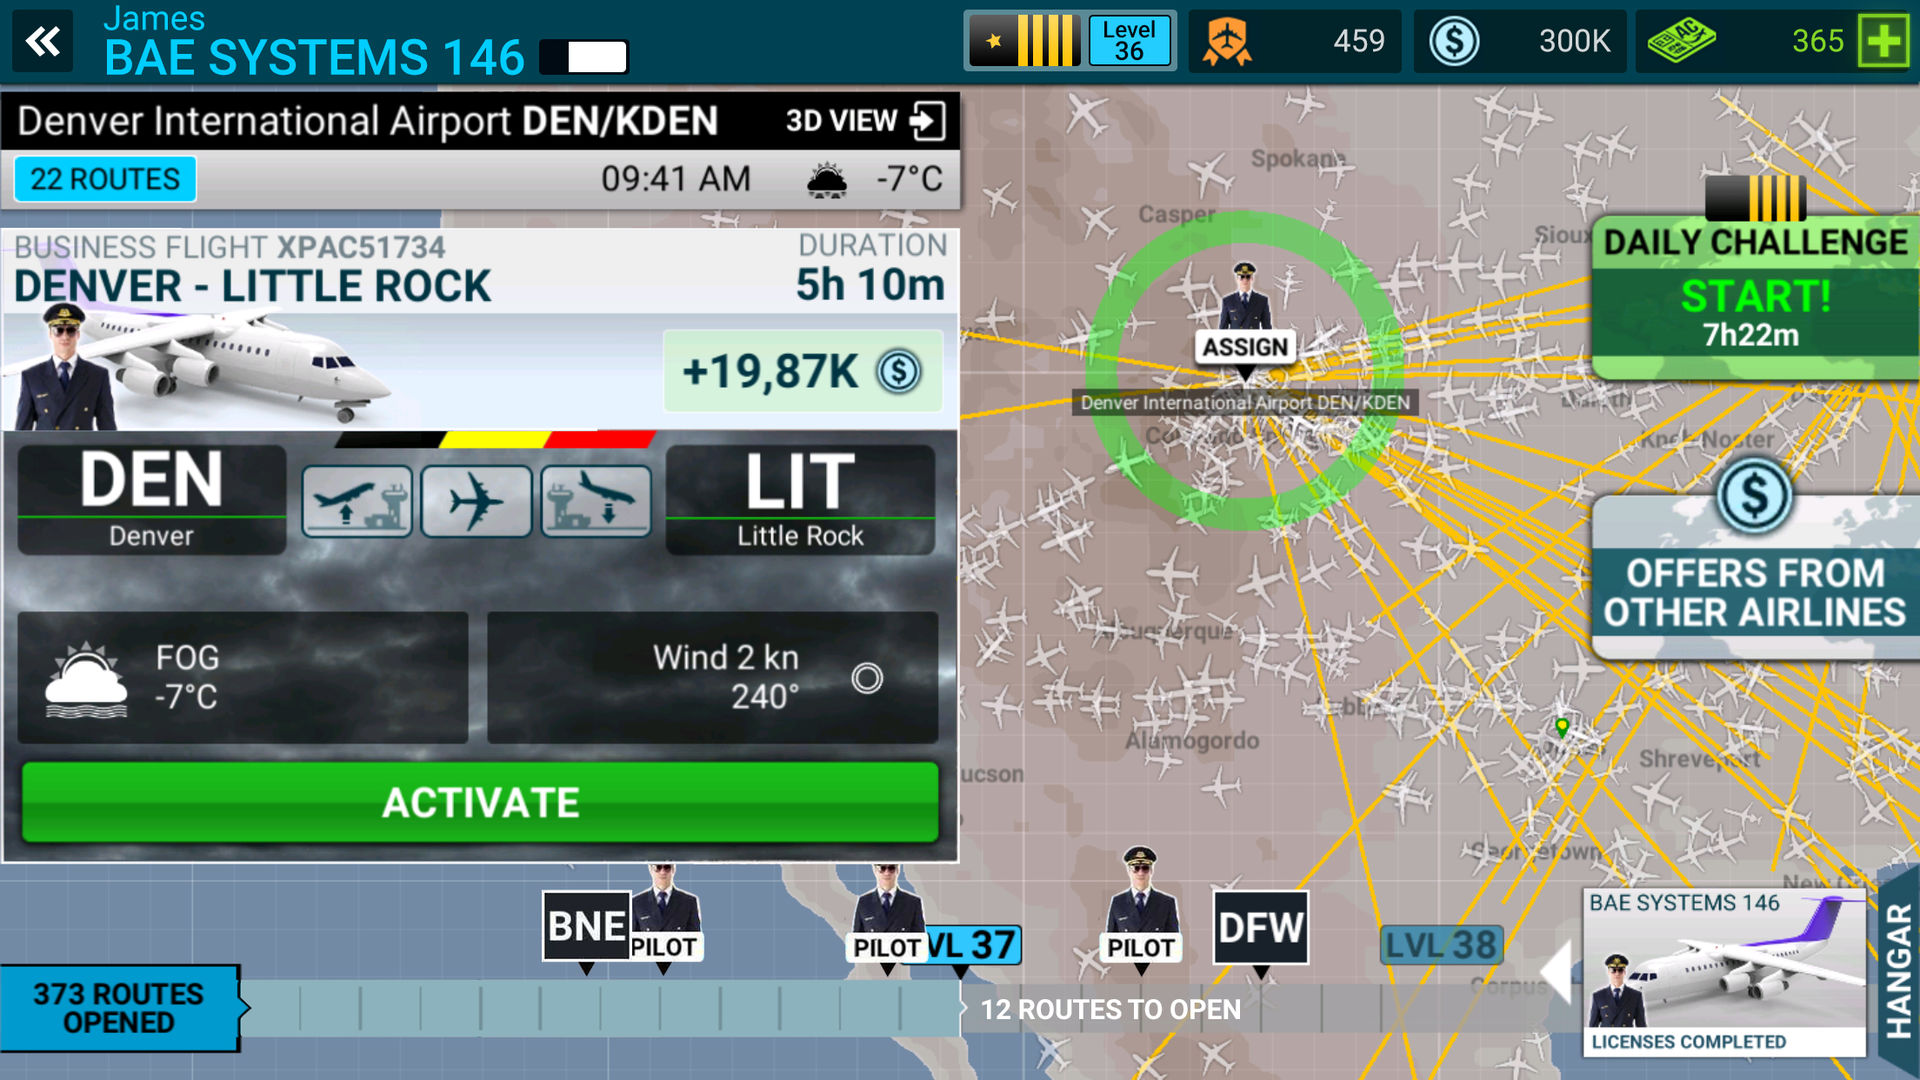 Screenshot of Airline Commander: Flight Game